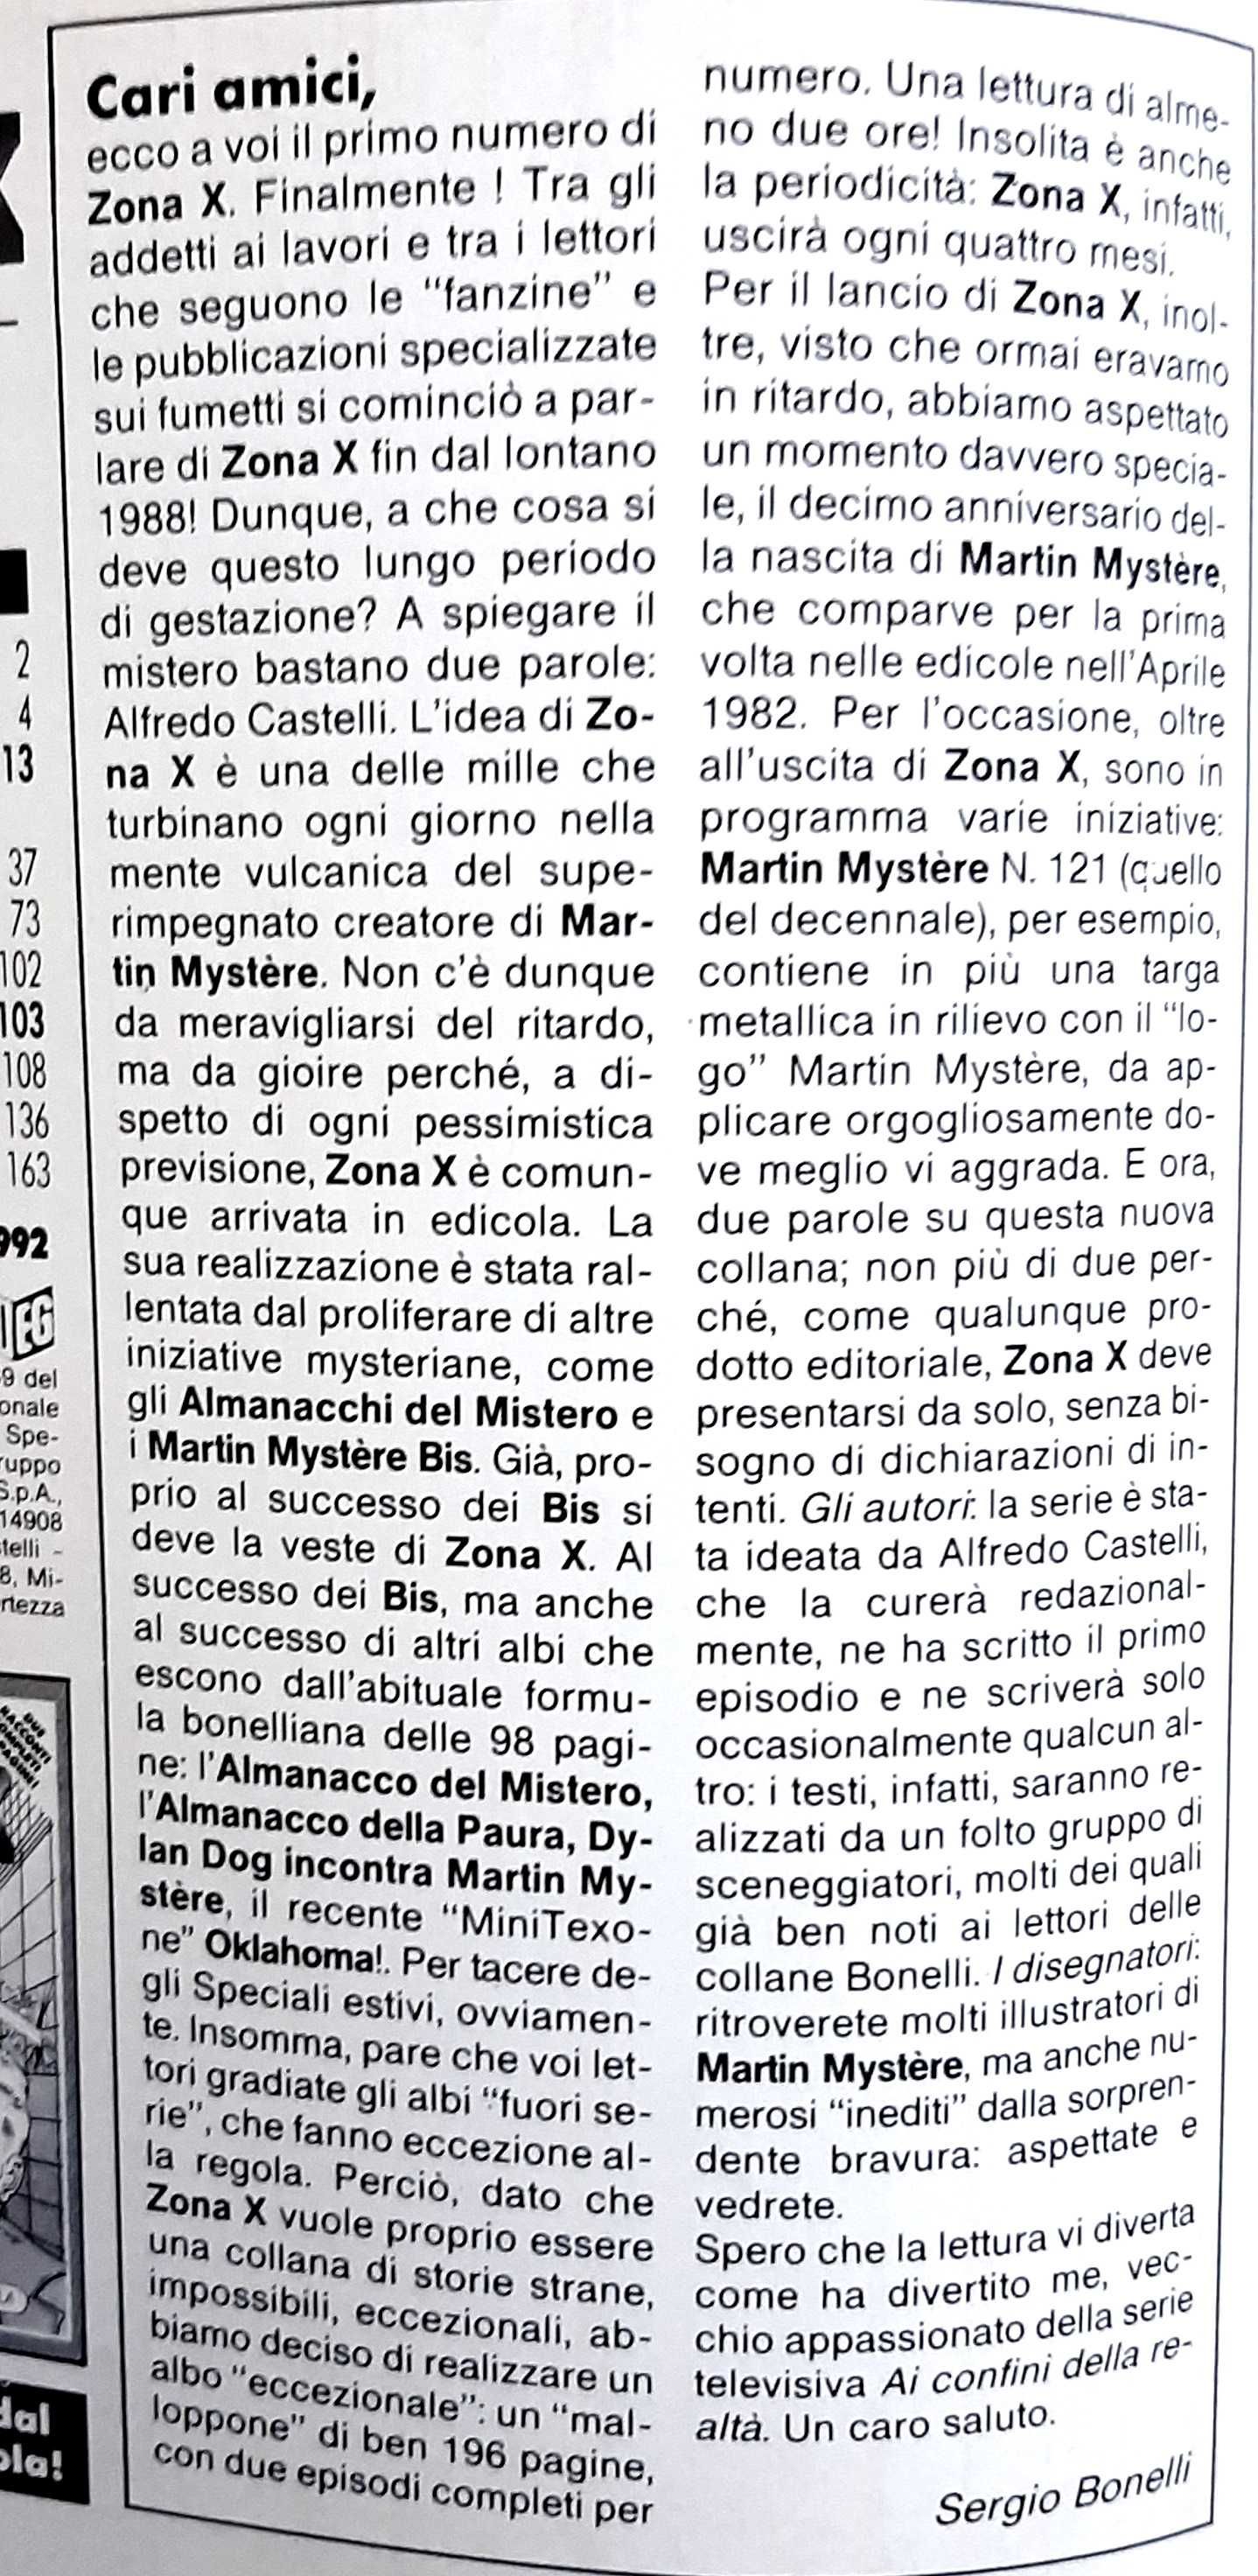 Mundo Martin Mystère. Lote de 13 álbuns BD “Zona X” em italiano